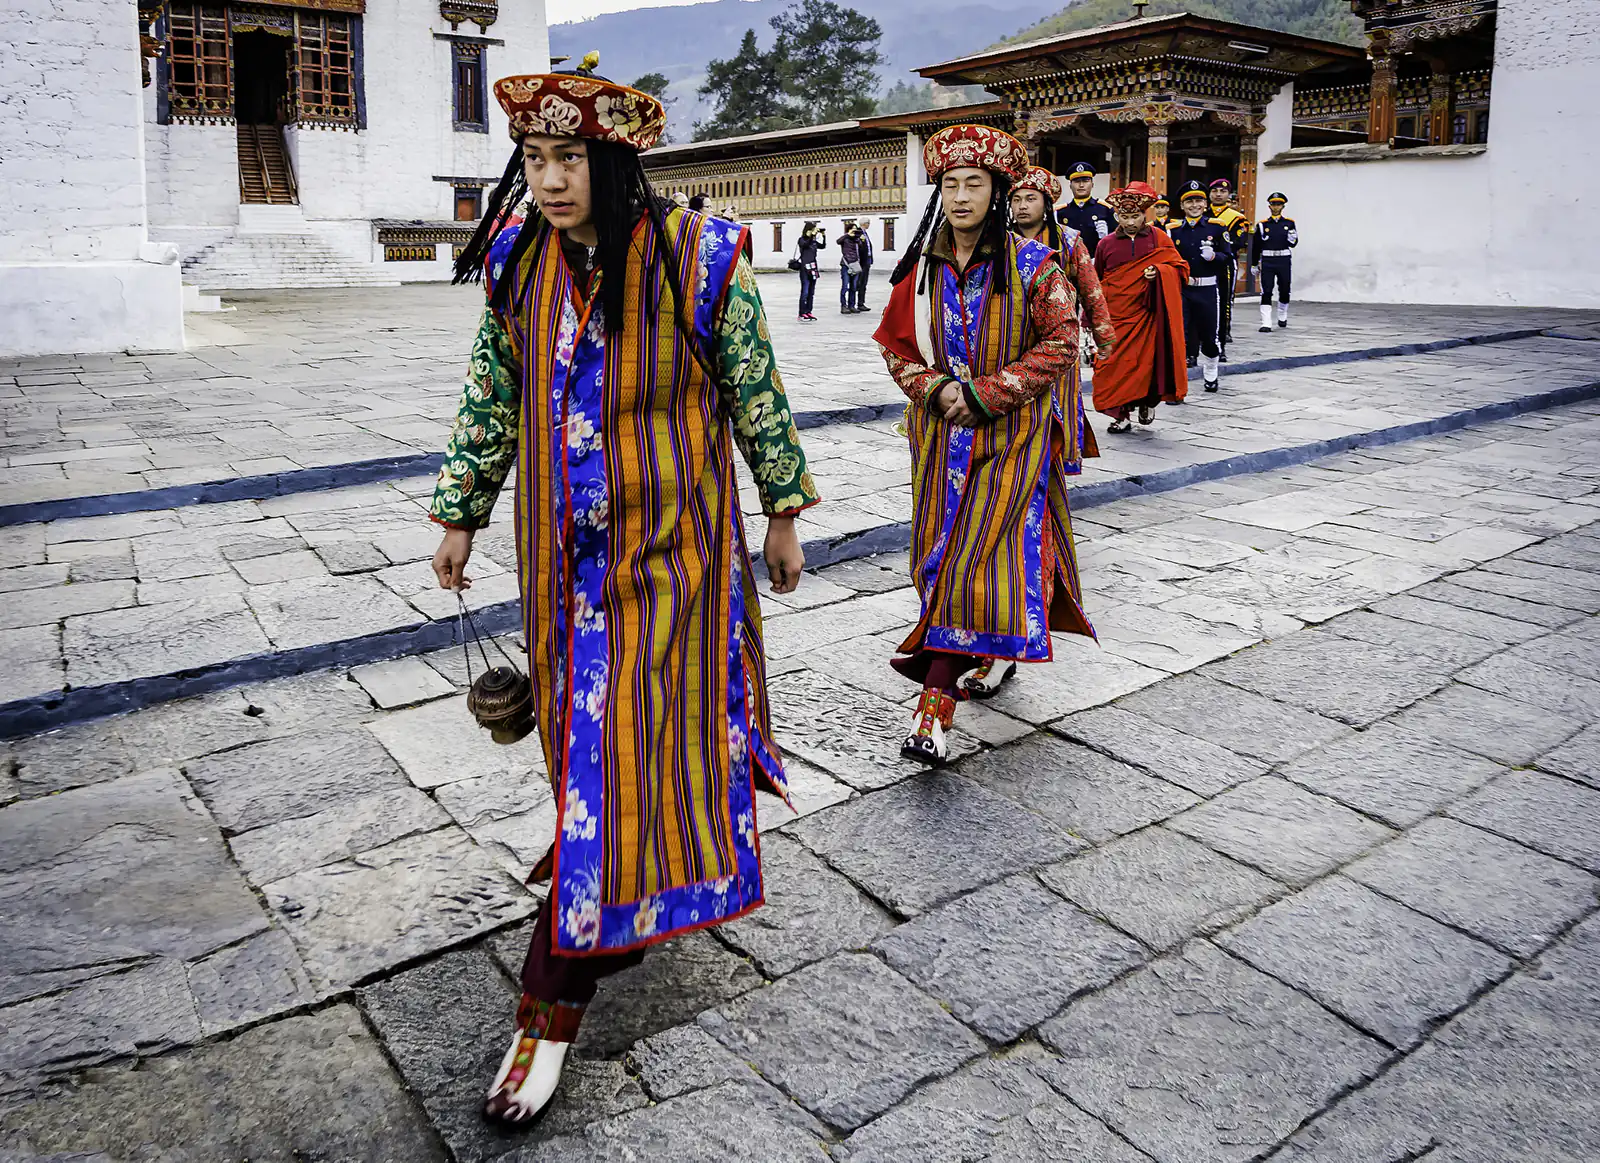 Retiring the National Colors honor guard, Tashichho Dzong, Thimpu